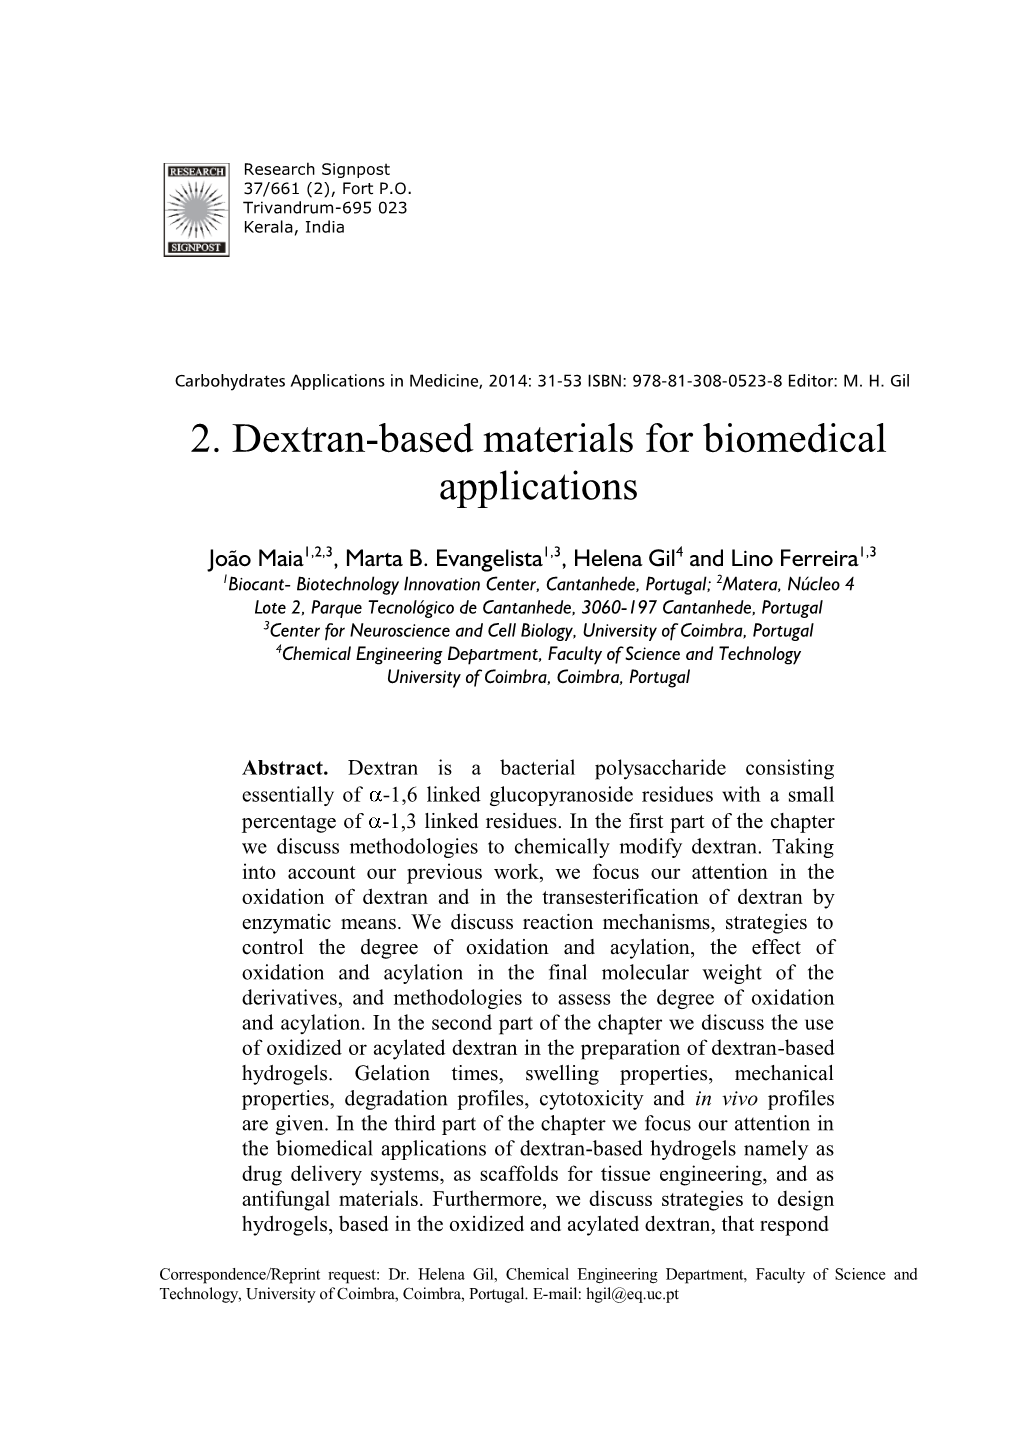 2. Dextran-Based Materials for Biomedical Applications